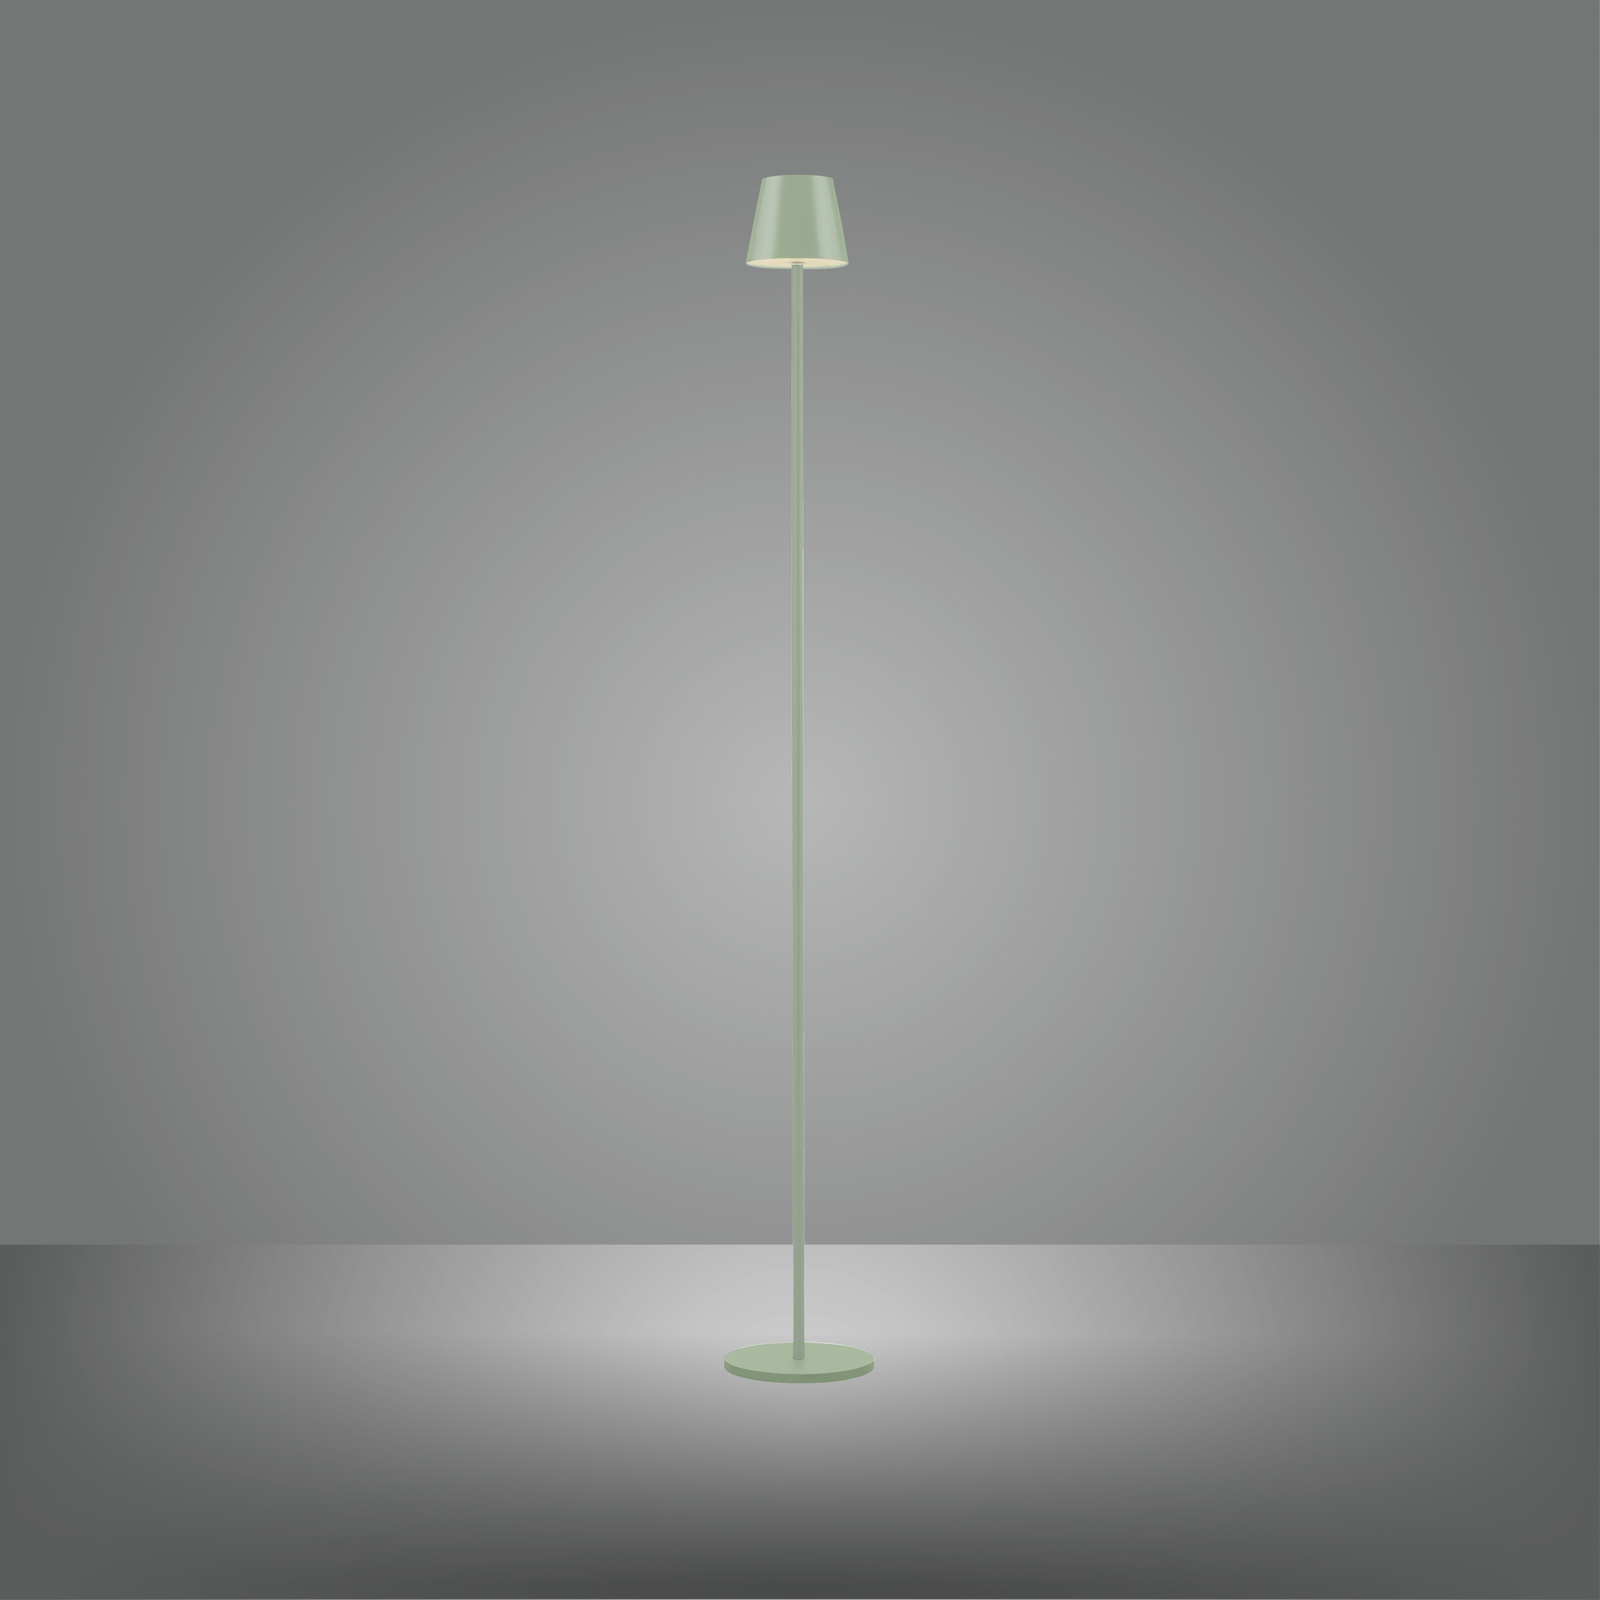 JUST LIGHT. Akumulatorowa lampa stojąca LED Euria, zielona, żelazo, IP54